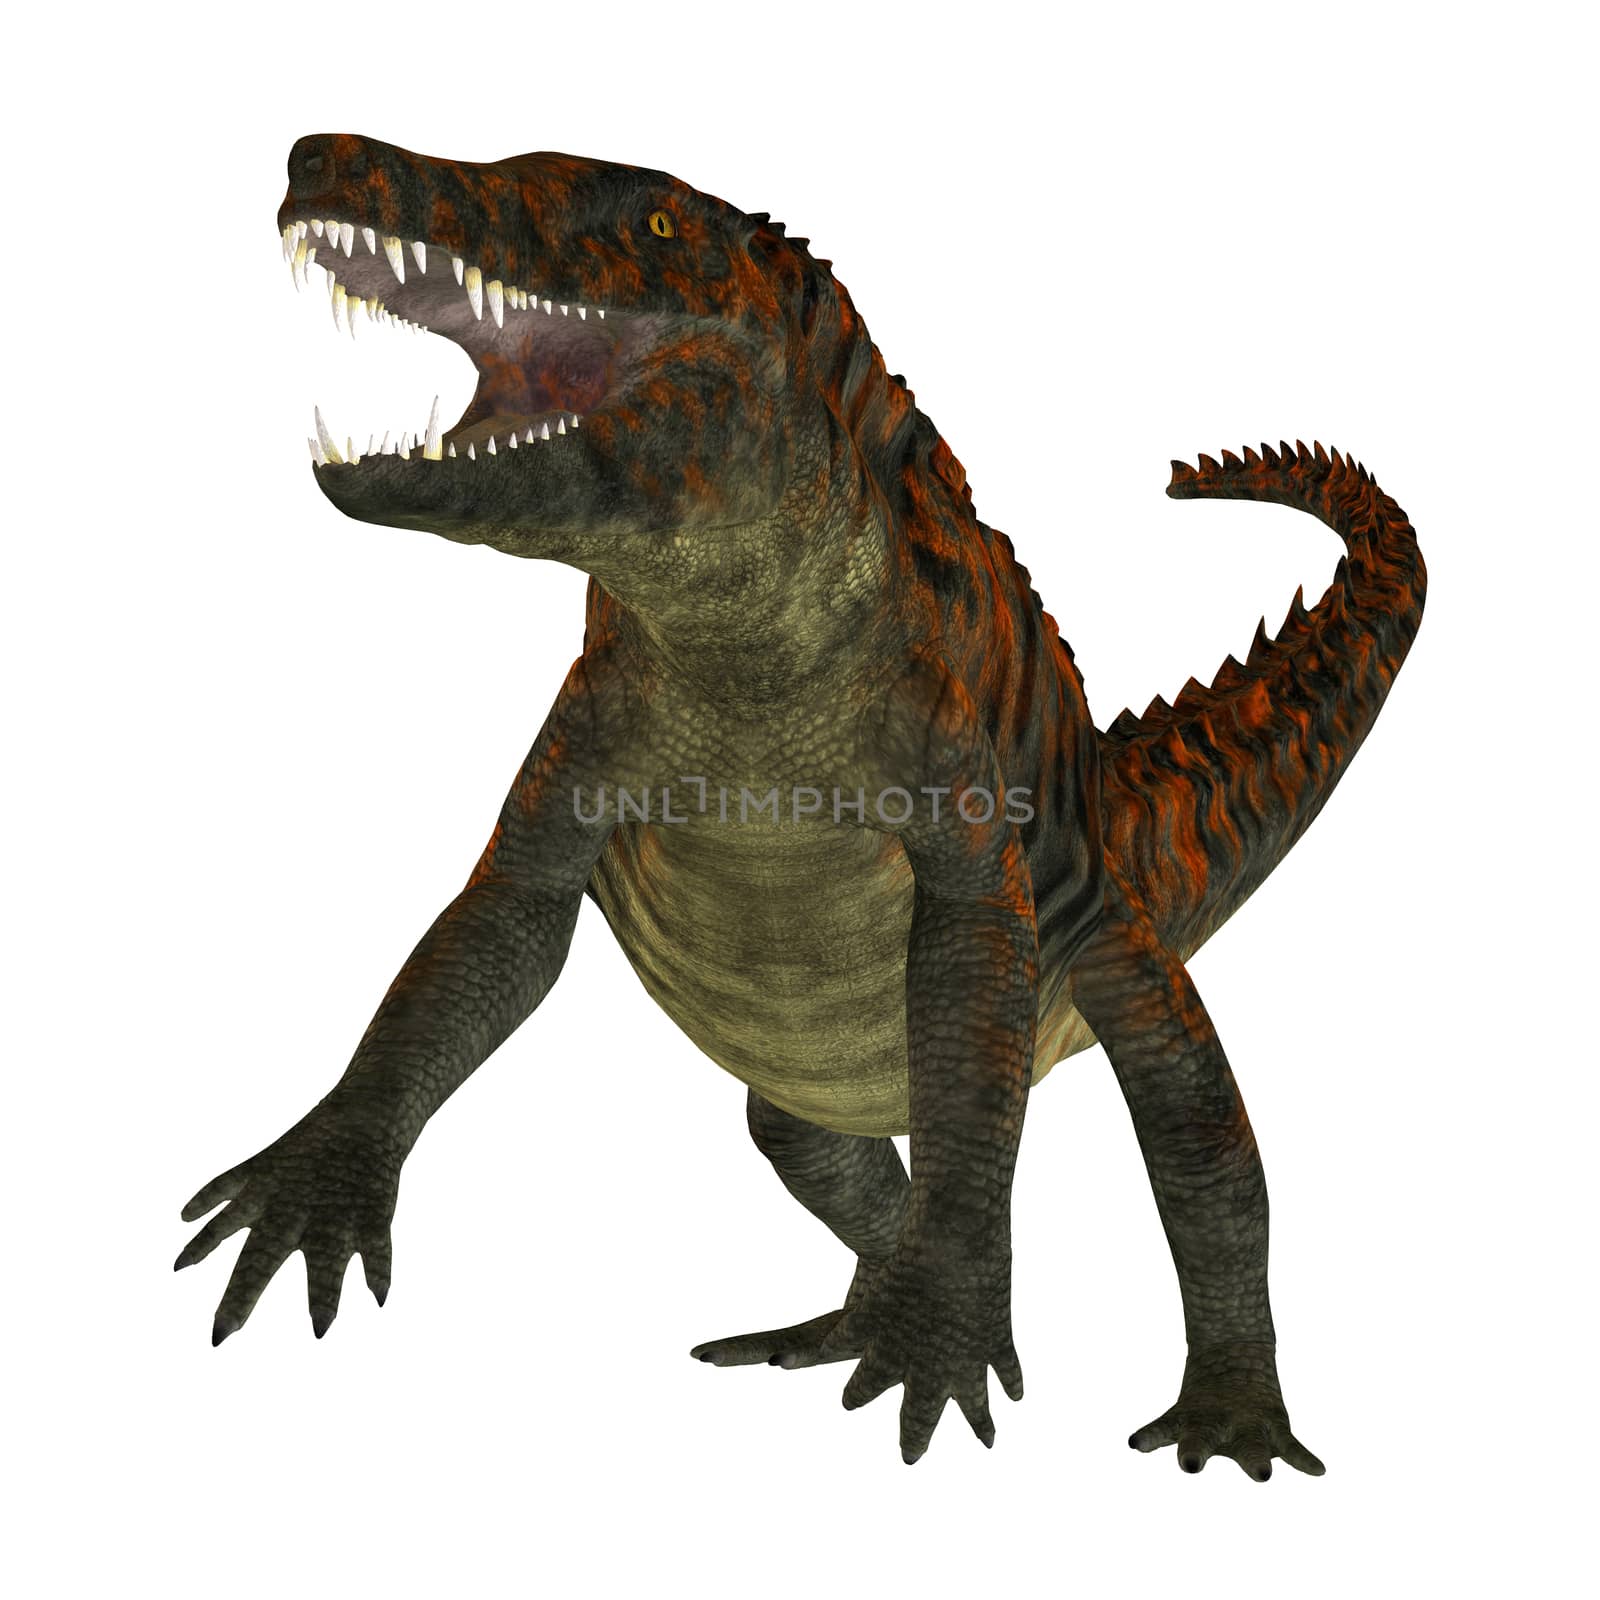 Uberabasuchus was an archosaur carnivorous crocodile that lived in the Cretaceous Period of Brazil.